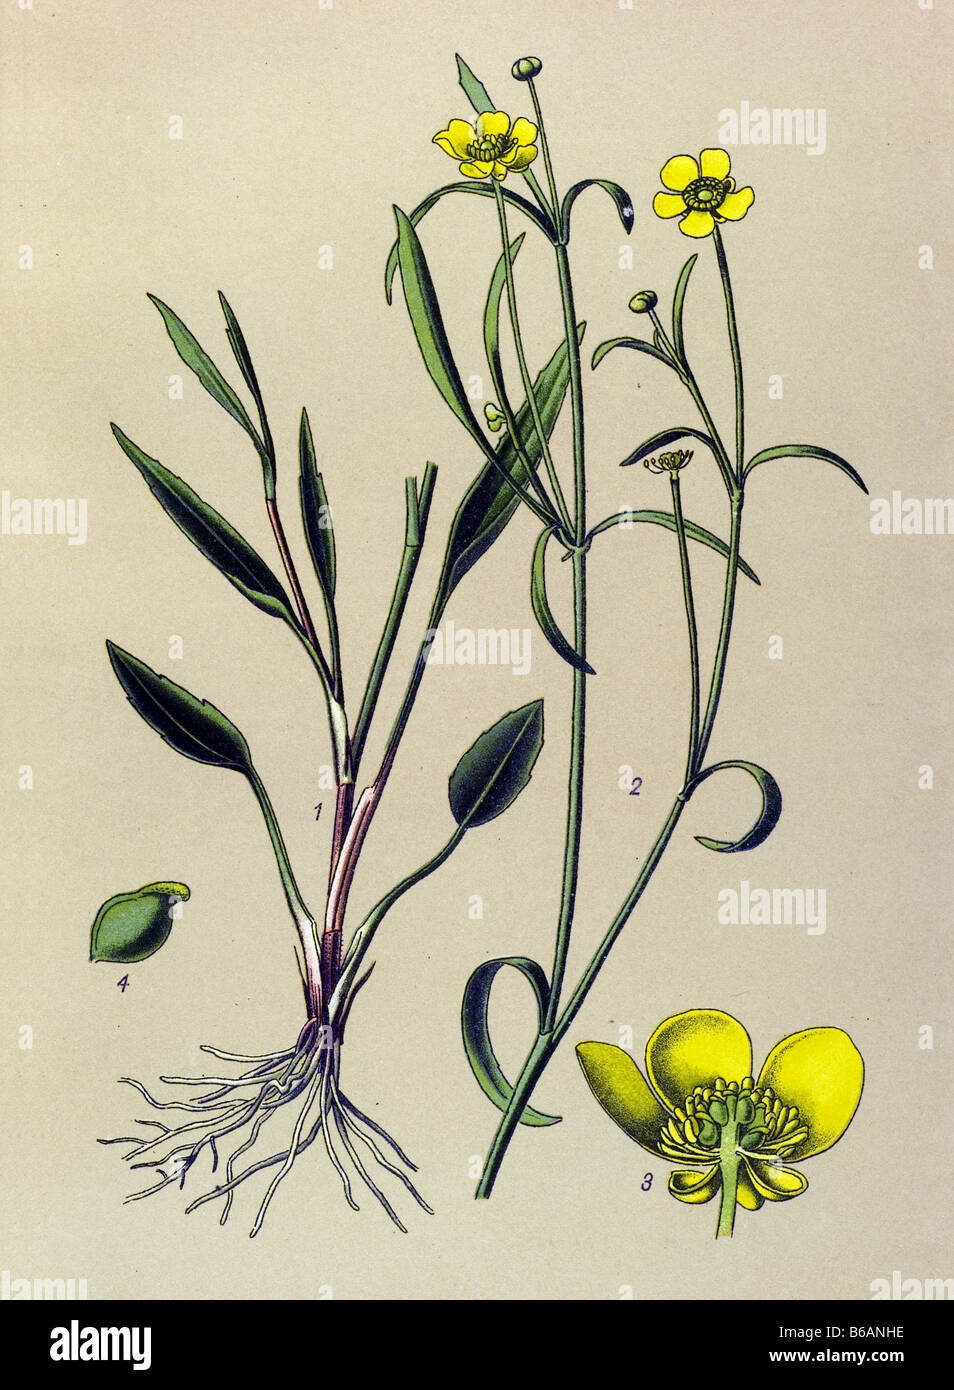 Ranunculus flammula poisonous plants illustrations Stock Photo